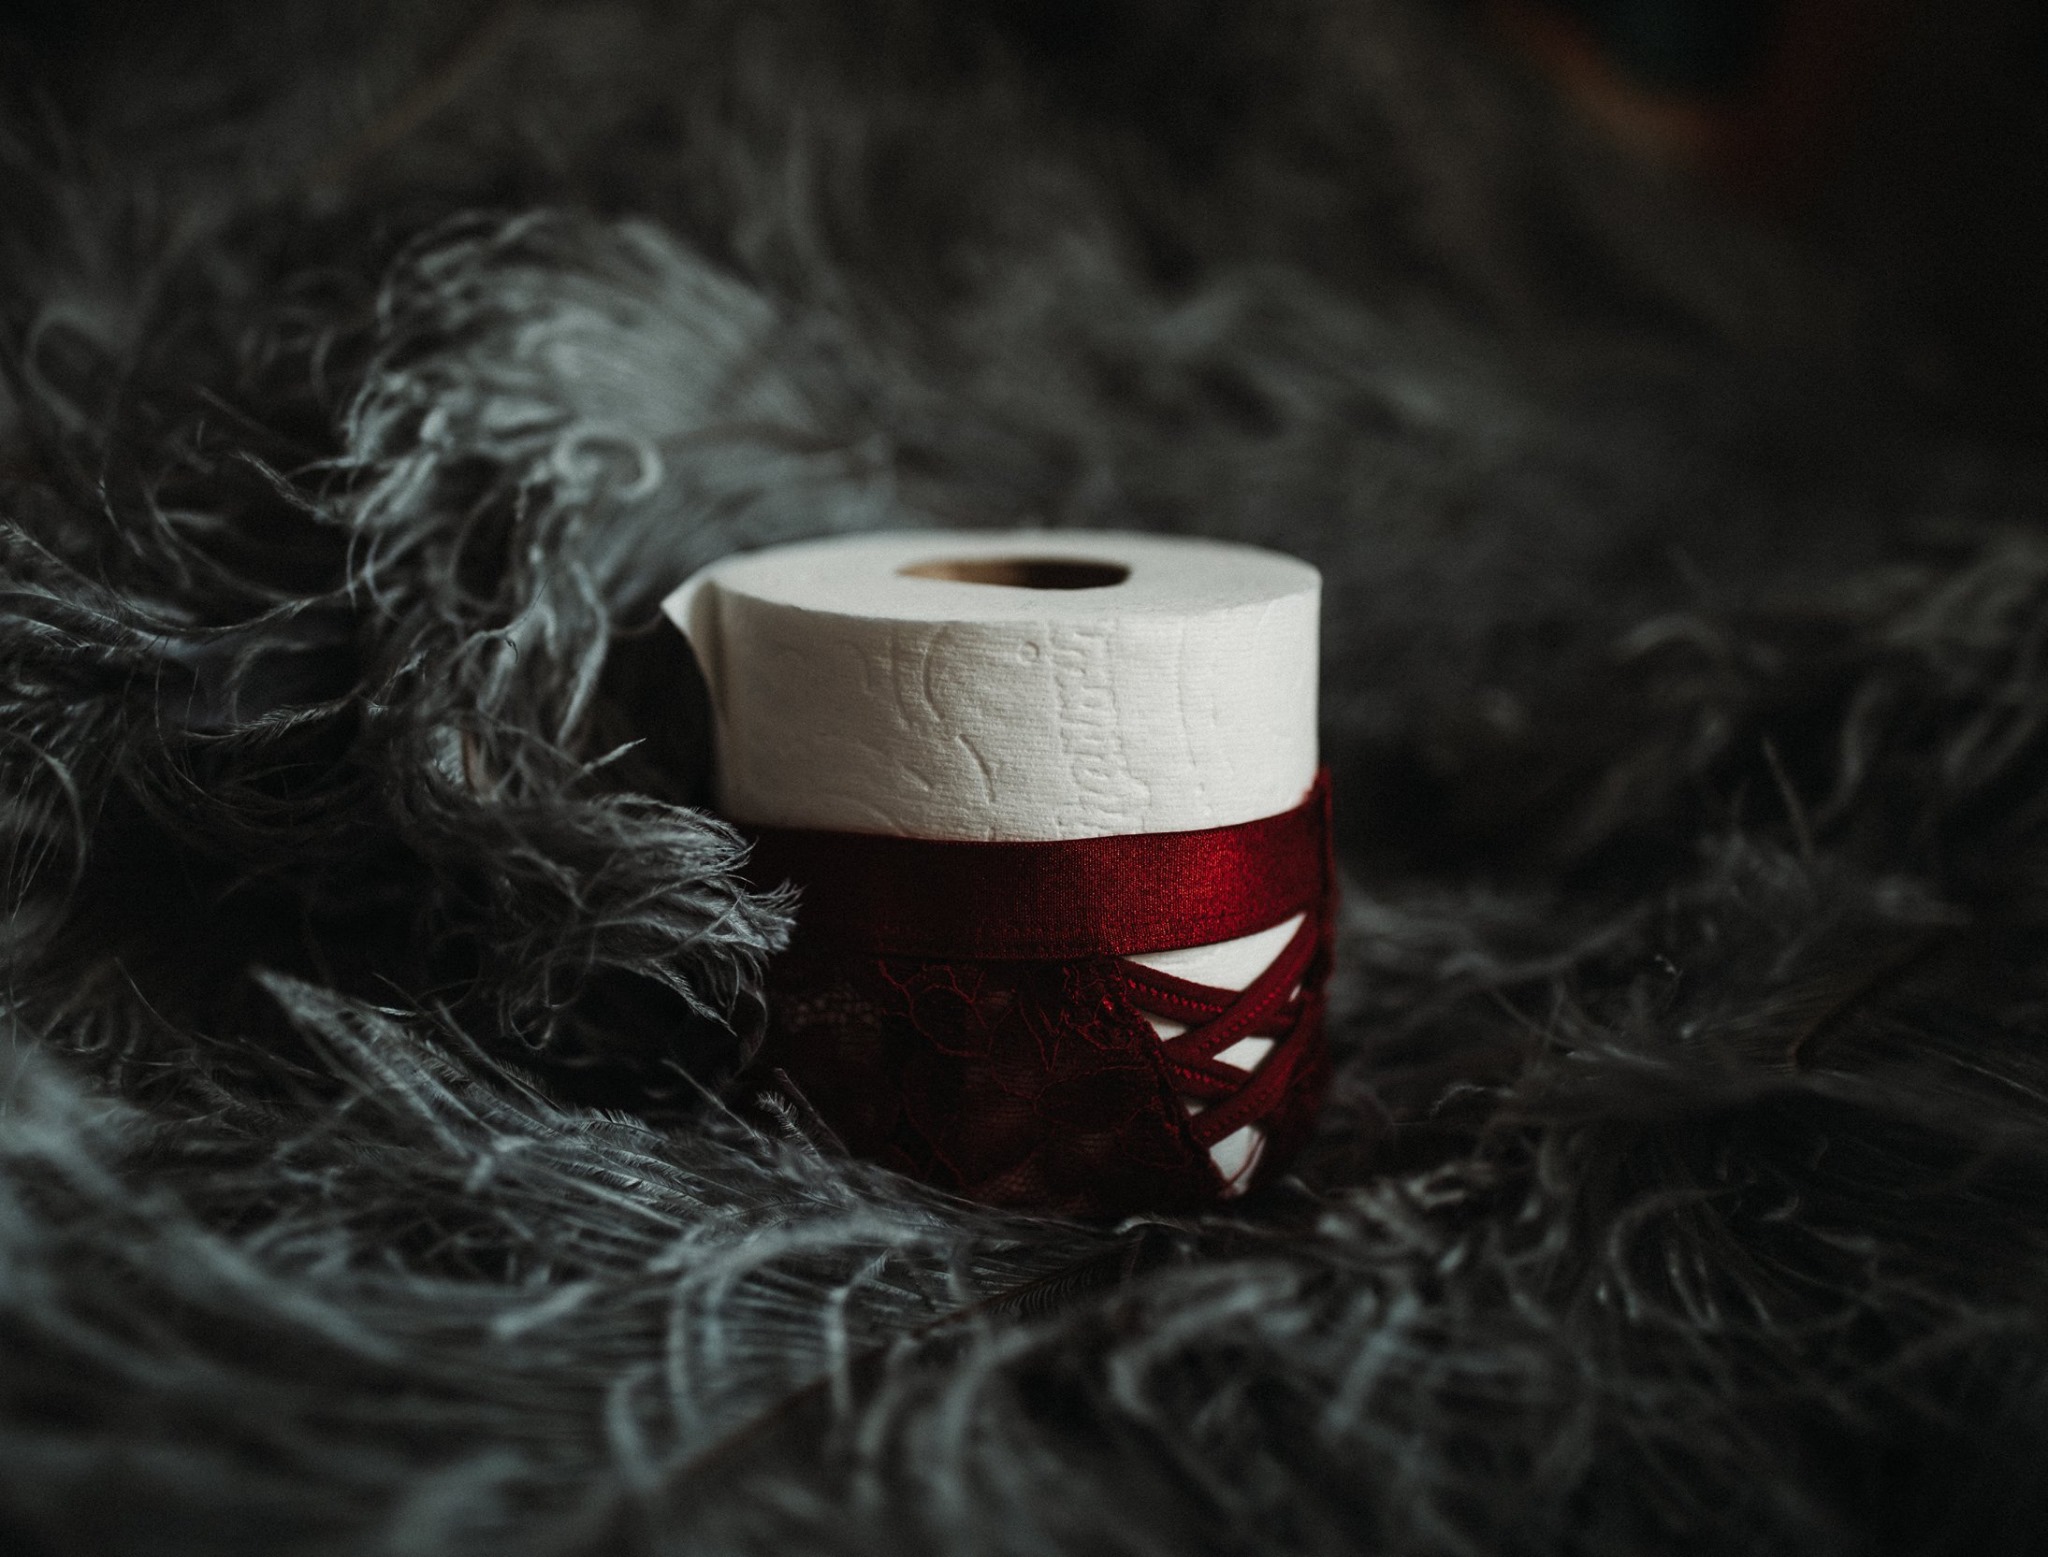 covid-19 toilet paper crisis